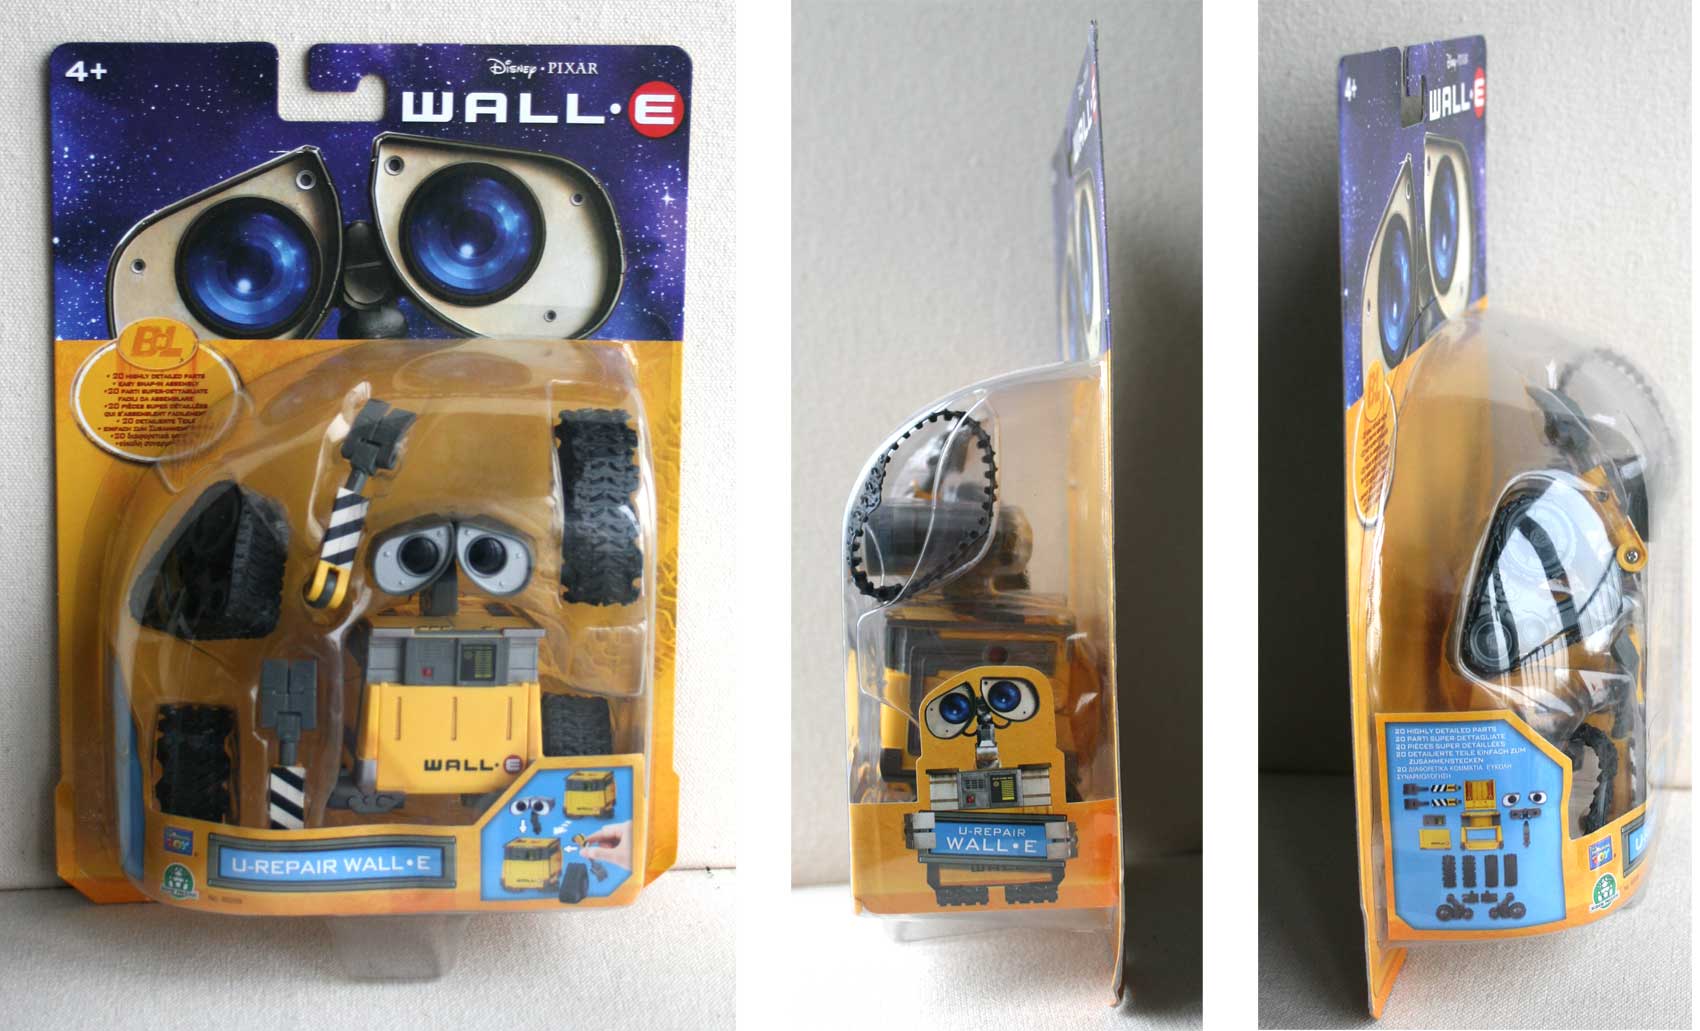 U-Repair Wall-E (2008) Packaging face et profil